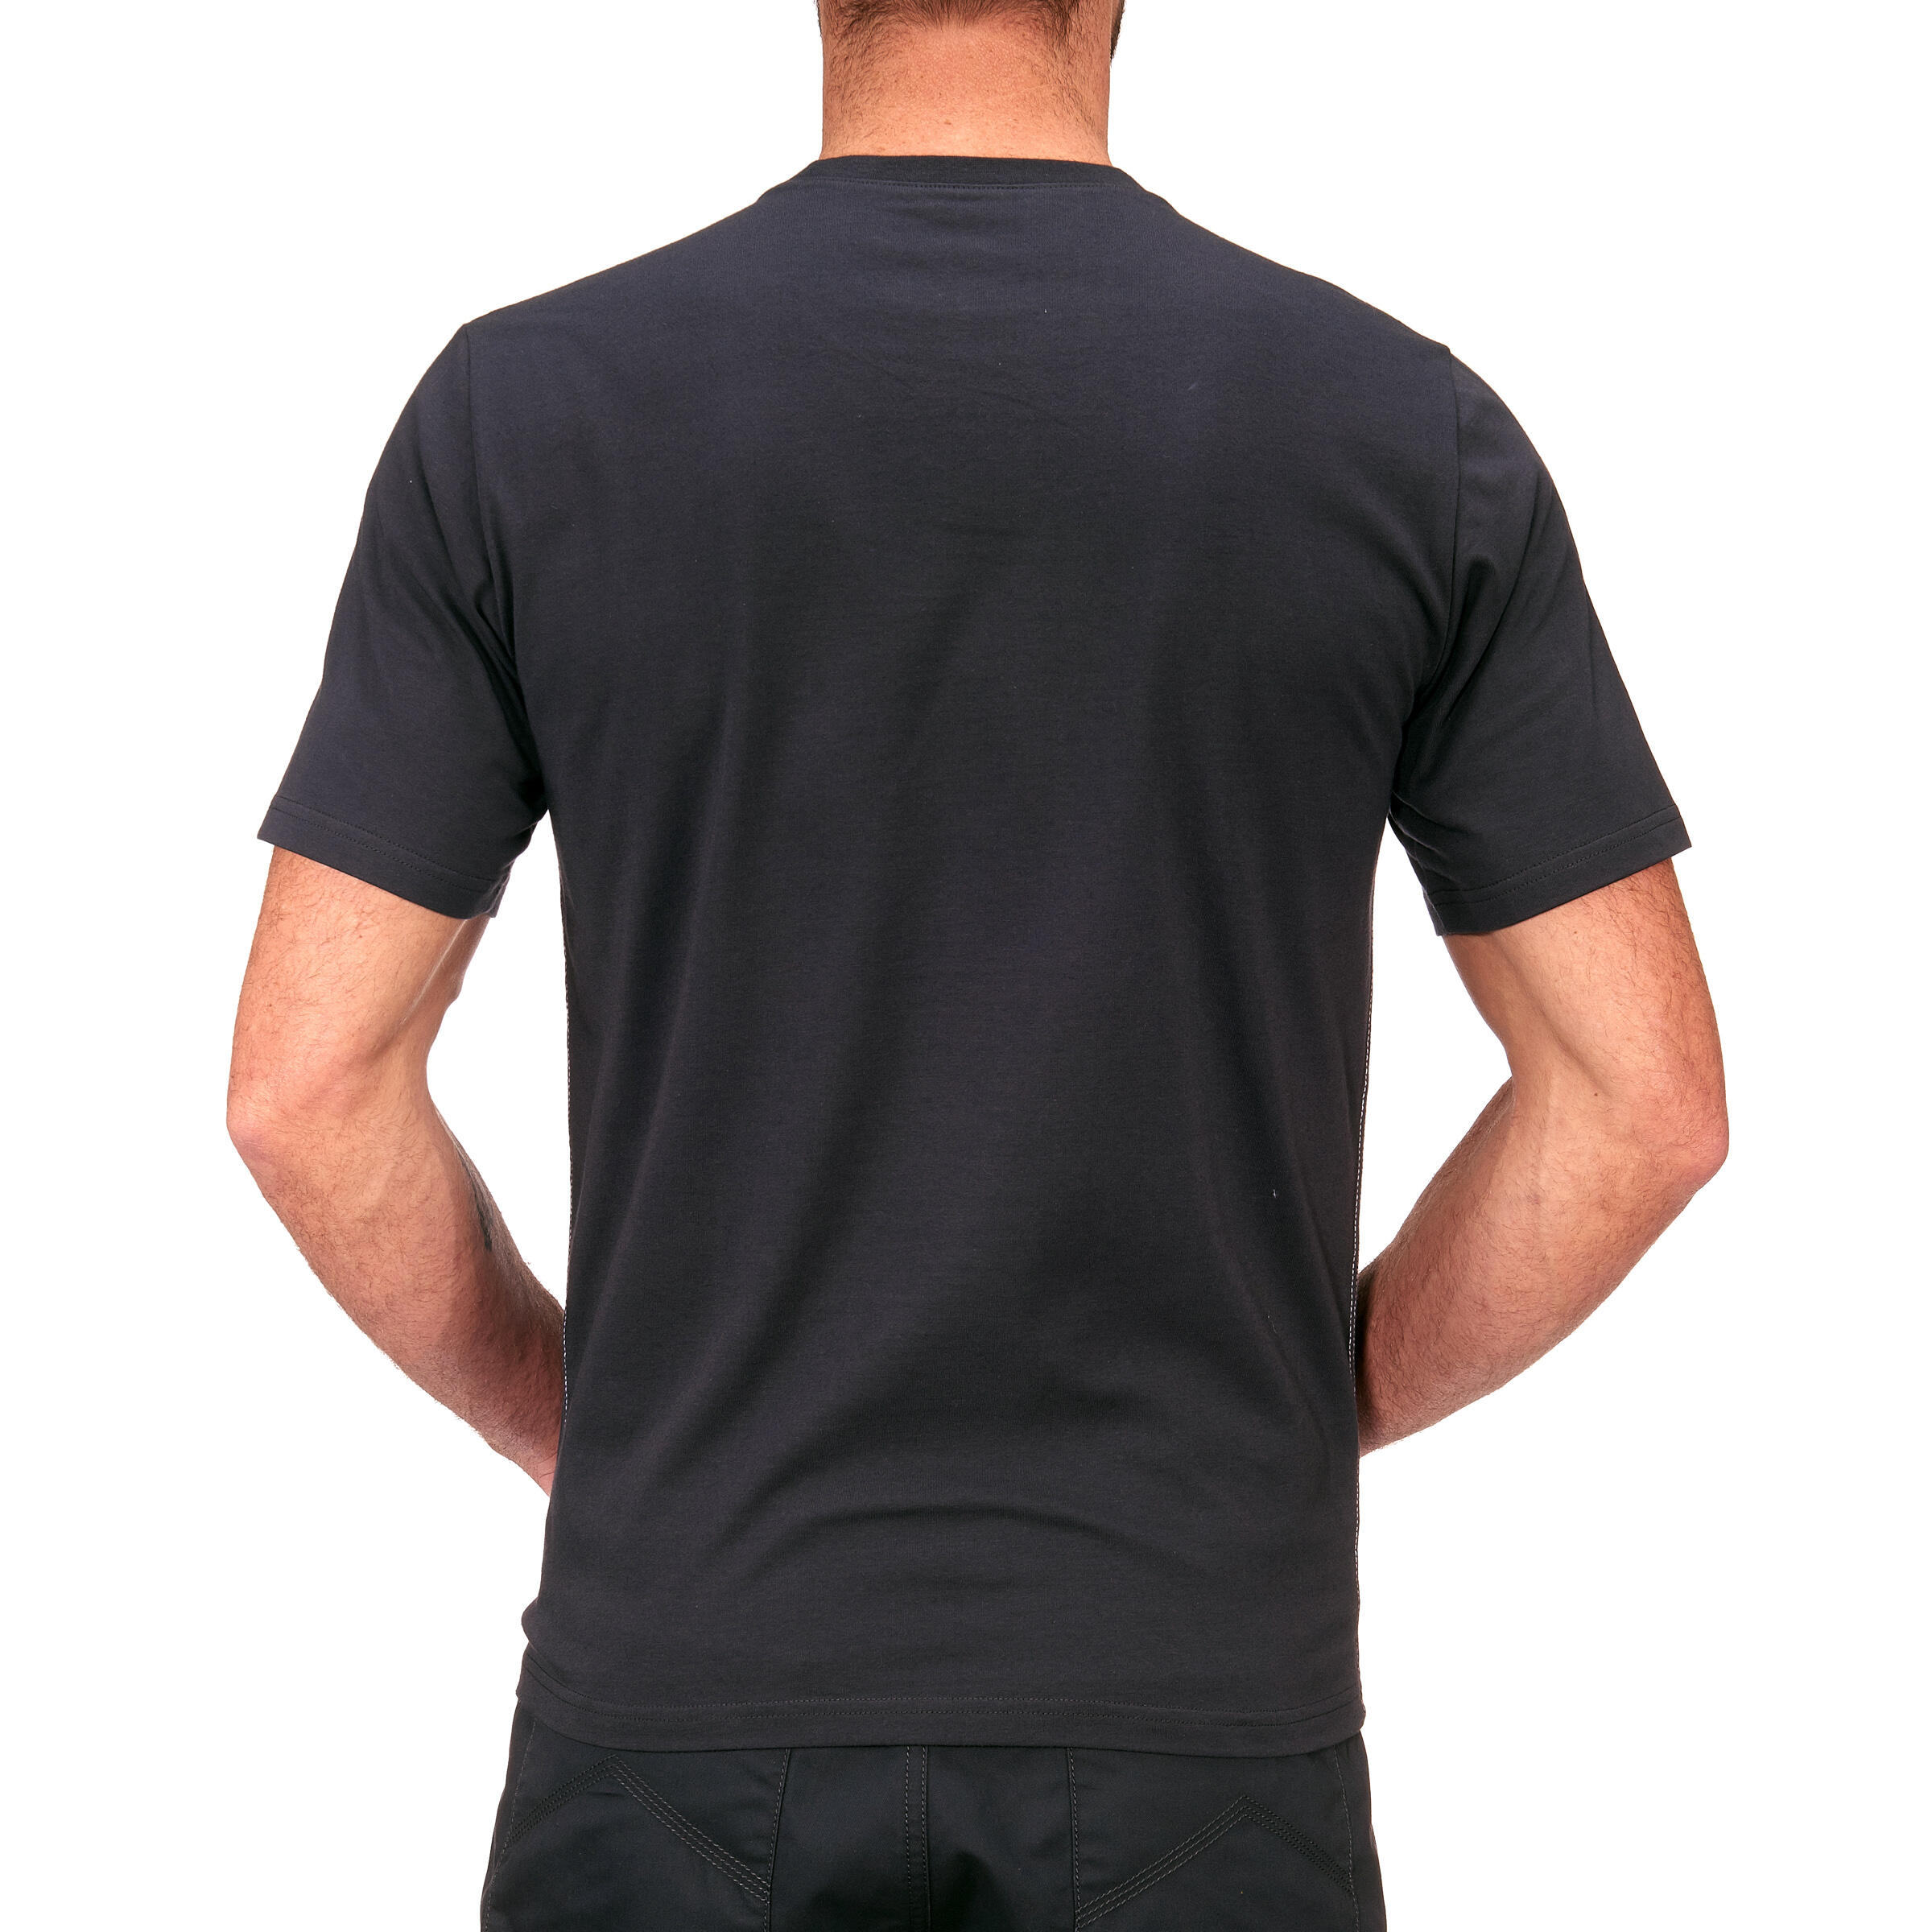 TechTIL100 Men's Short-Sleeved Hiking T-Shirt - Dark Grey 4/10